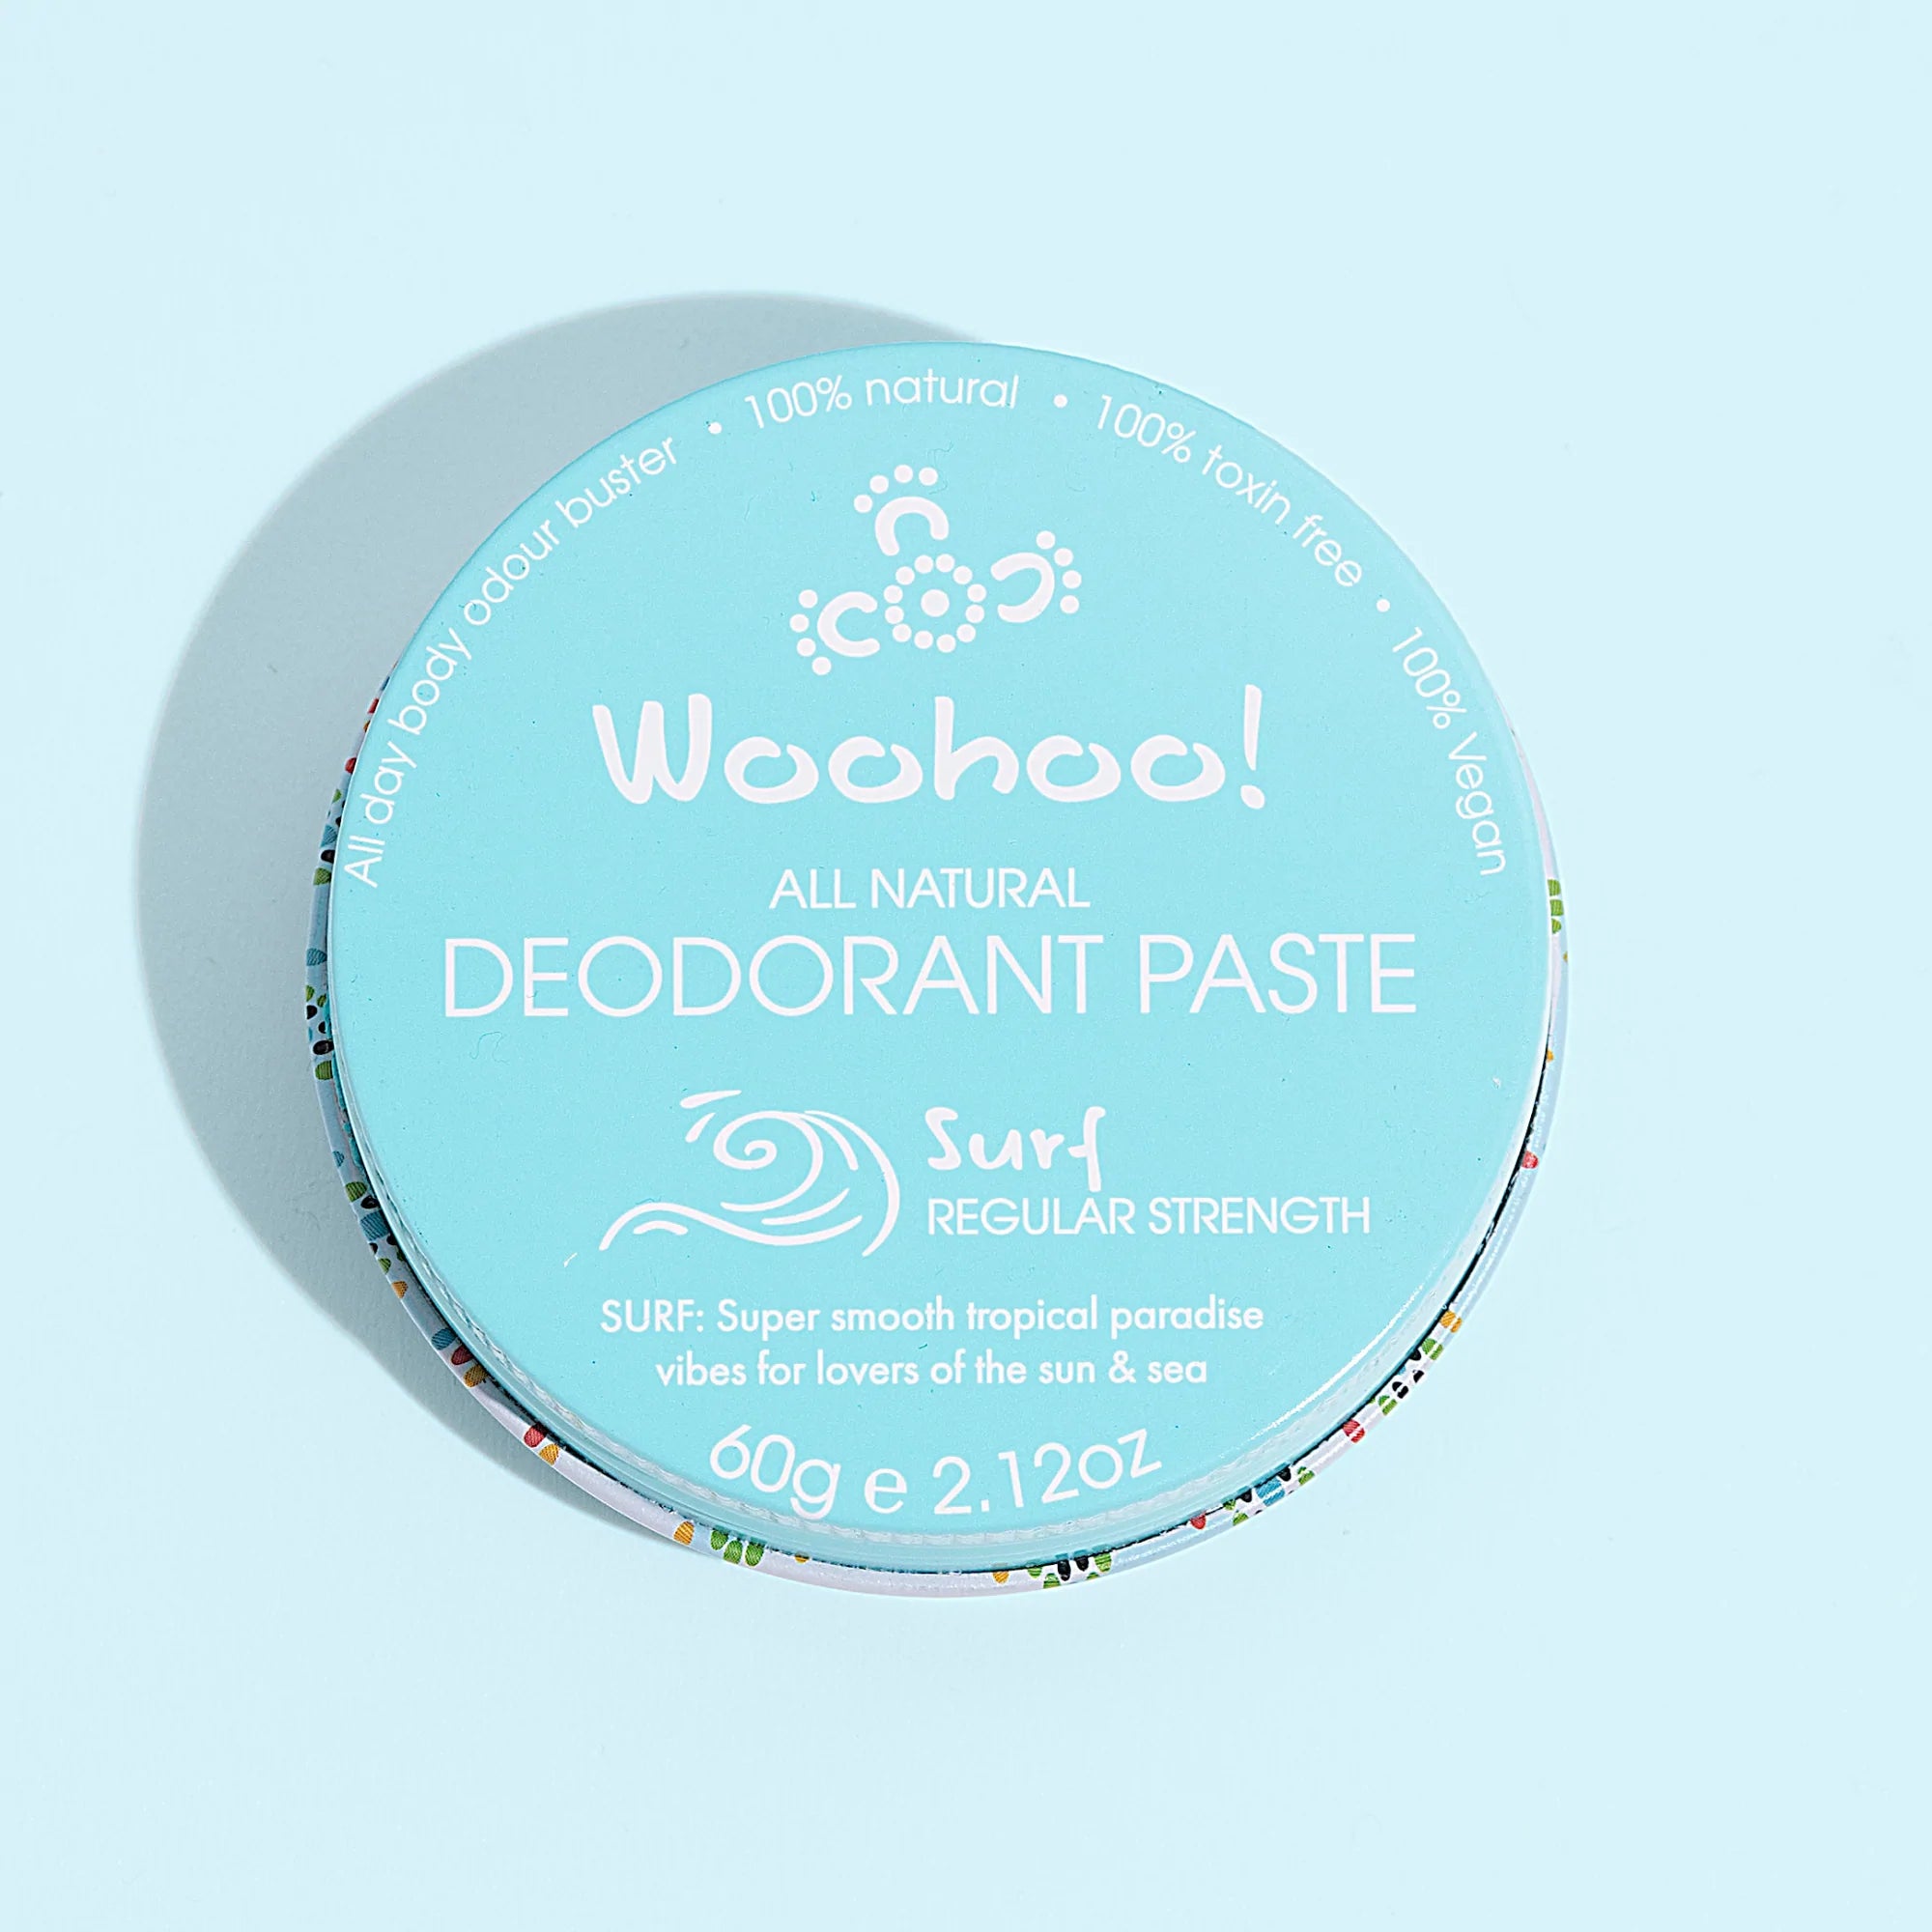 Woohoo Deodorant Paste Surf (Regular Strength)Tin 60g-The Living Co.